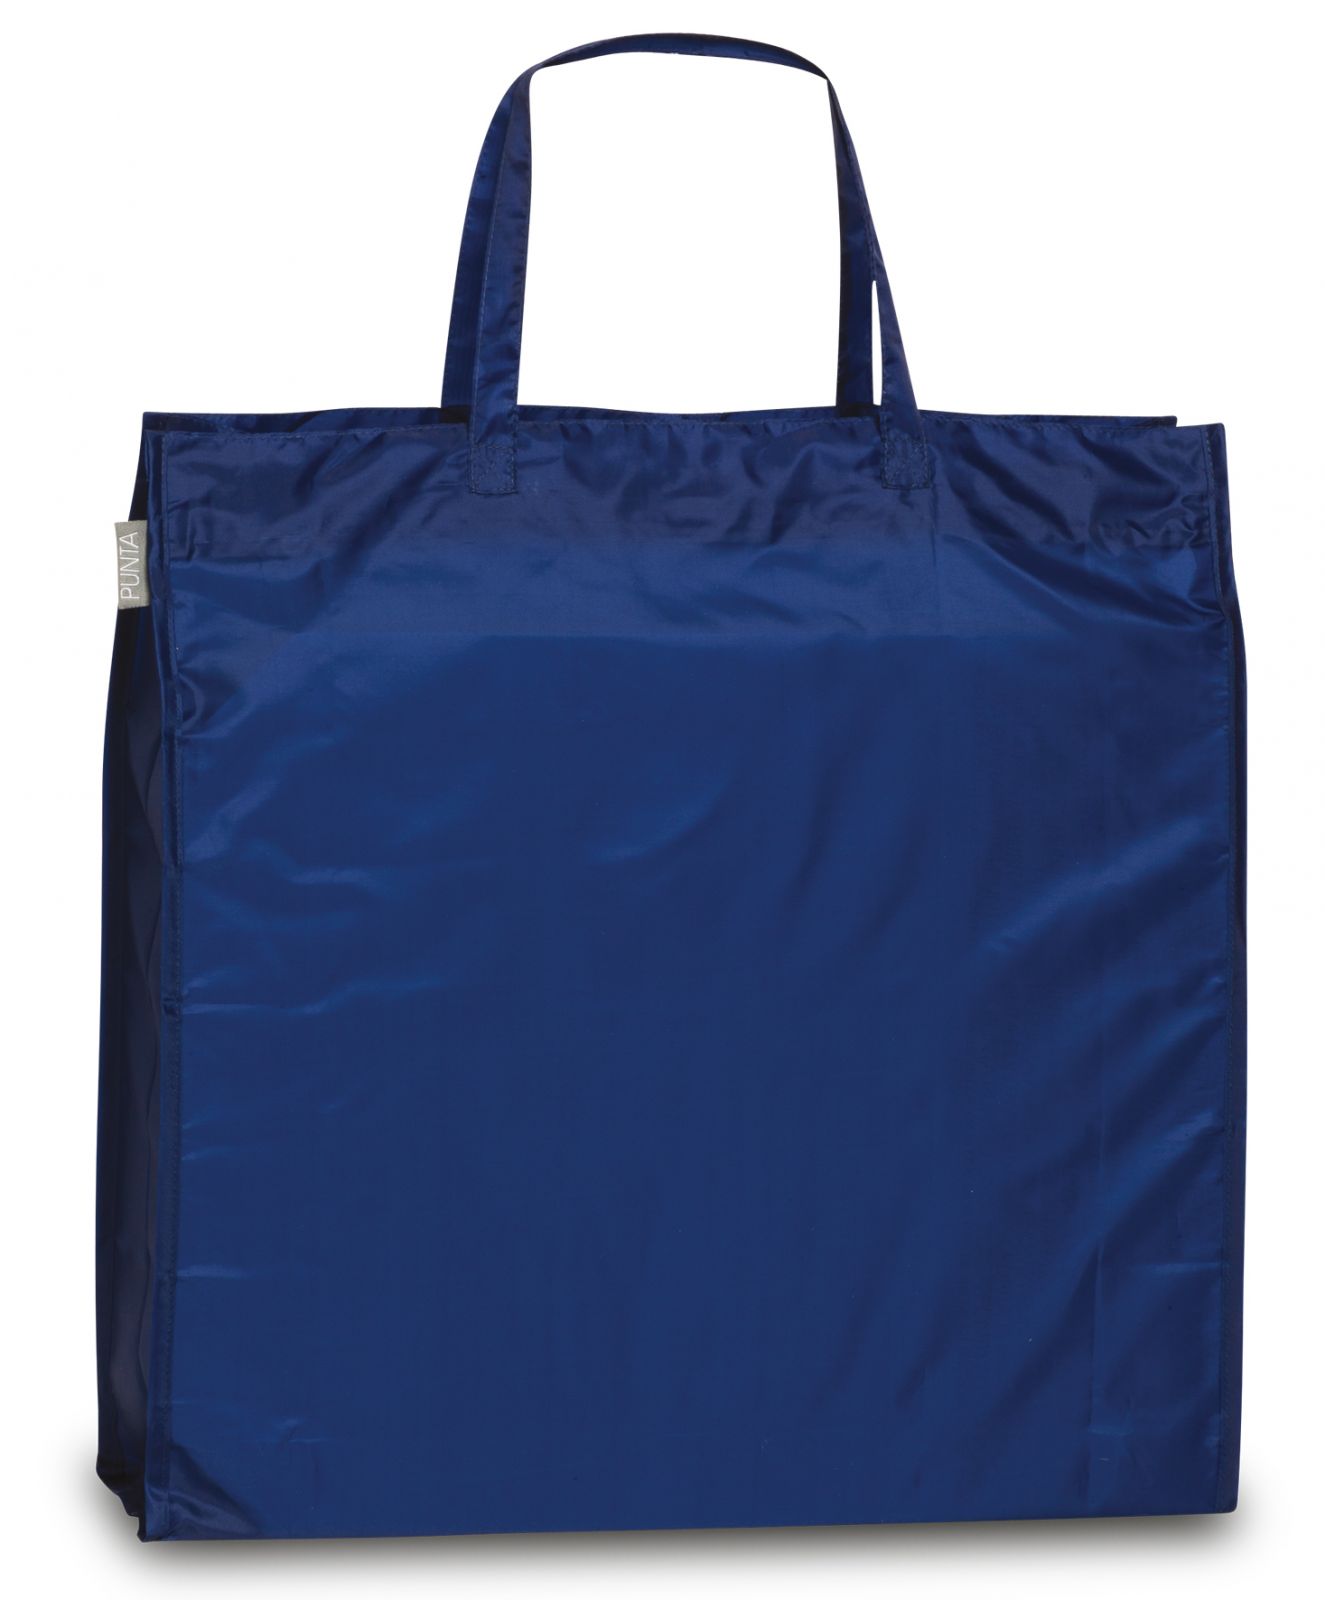 Punta Nákupní skládači taška XL modrá